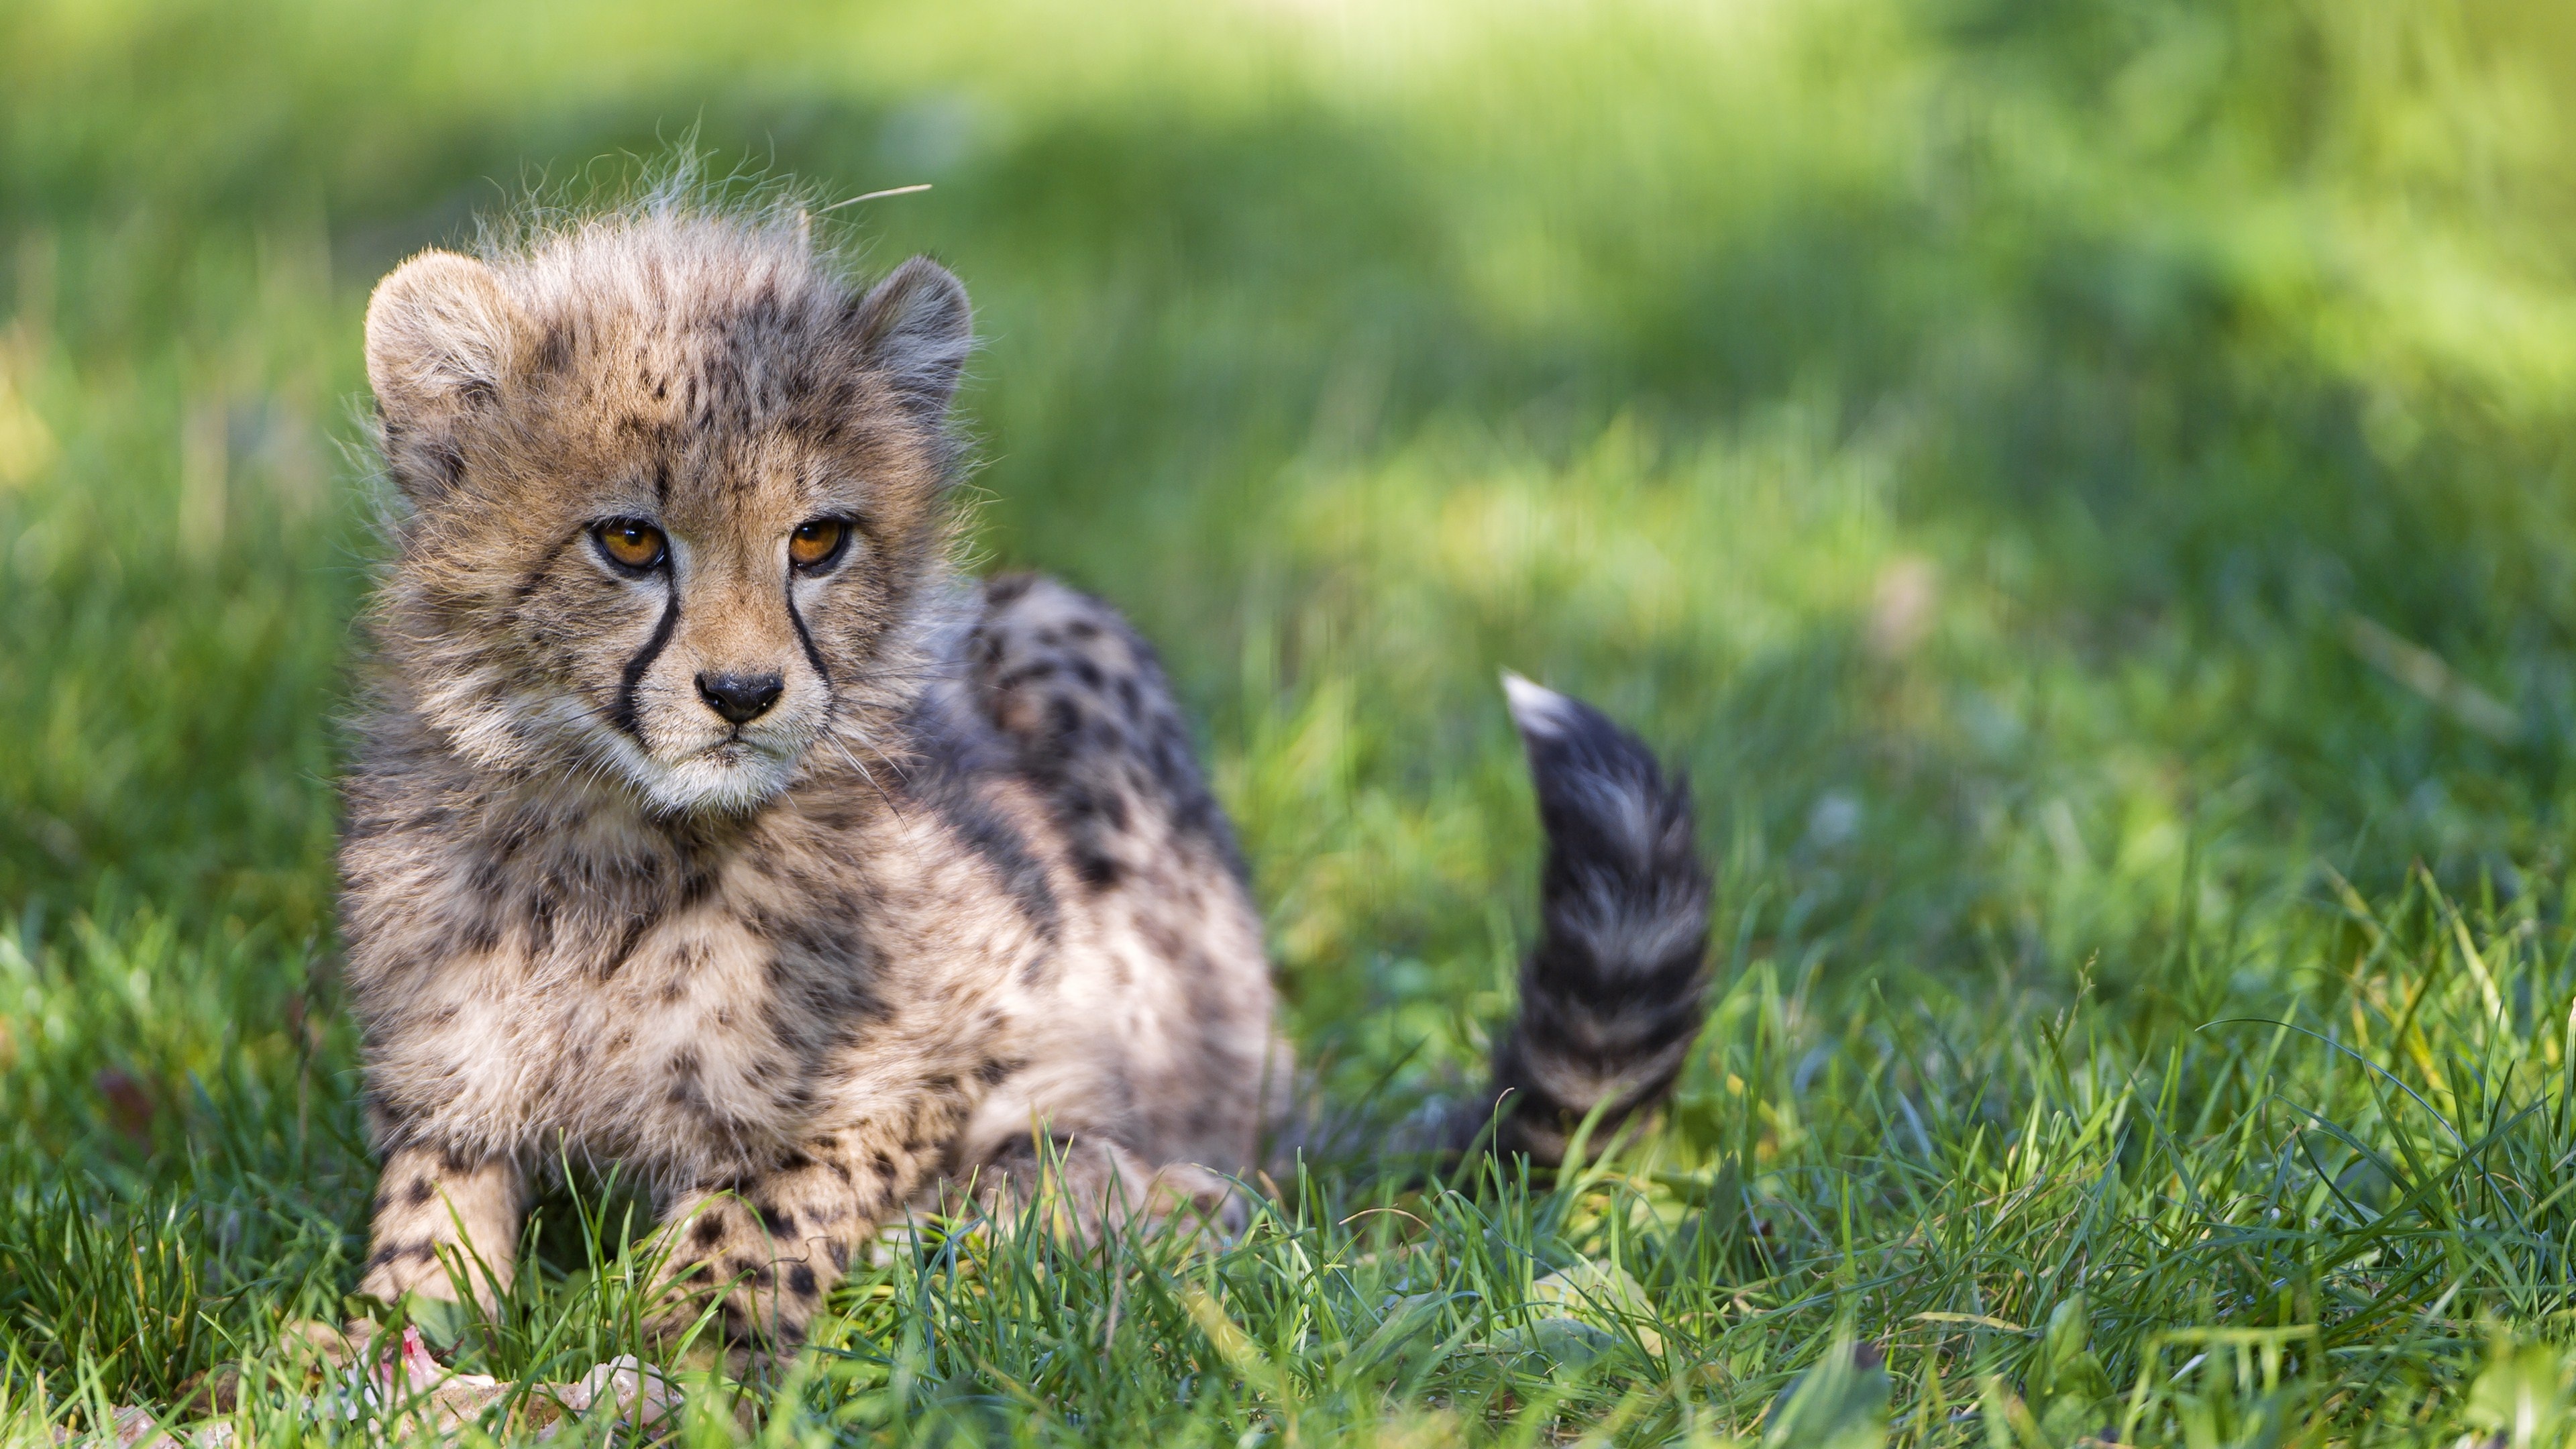 Playful cheetah cub, Adorable feline, Desktop wallpaper, 4K resolution, 3840x2160 4K Desktop